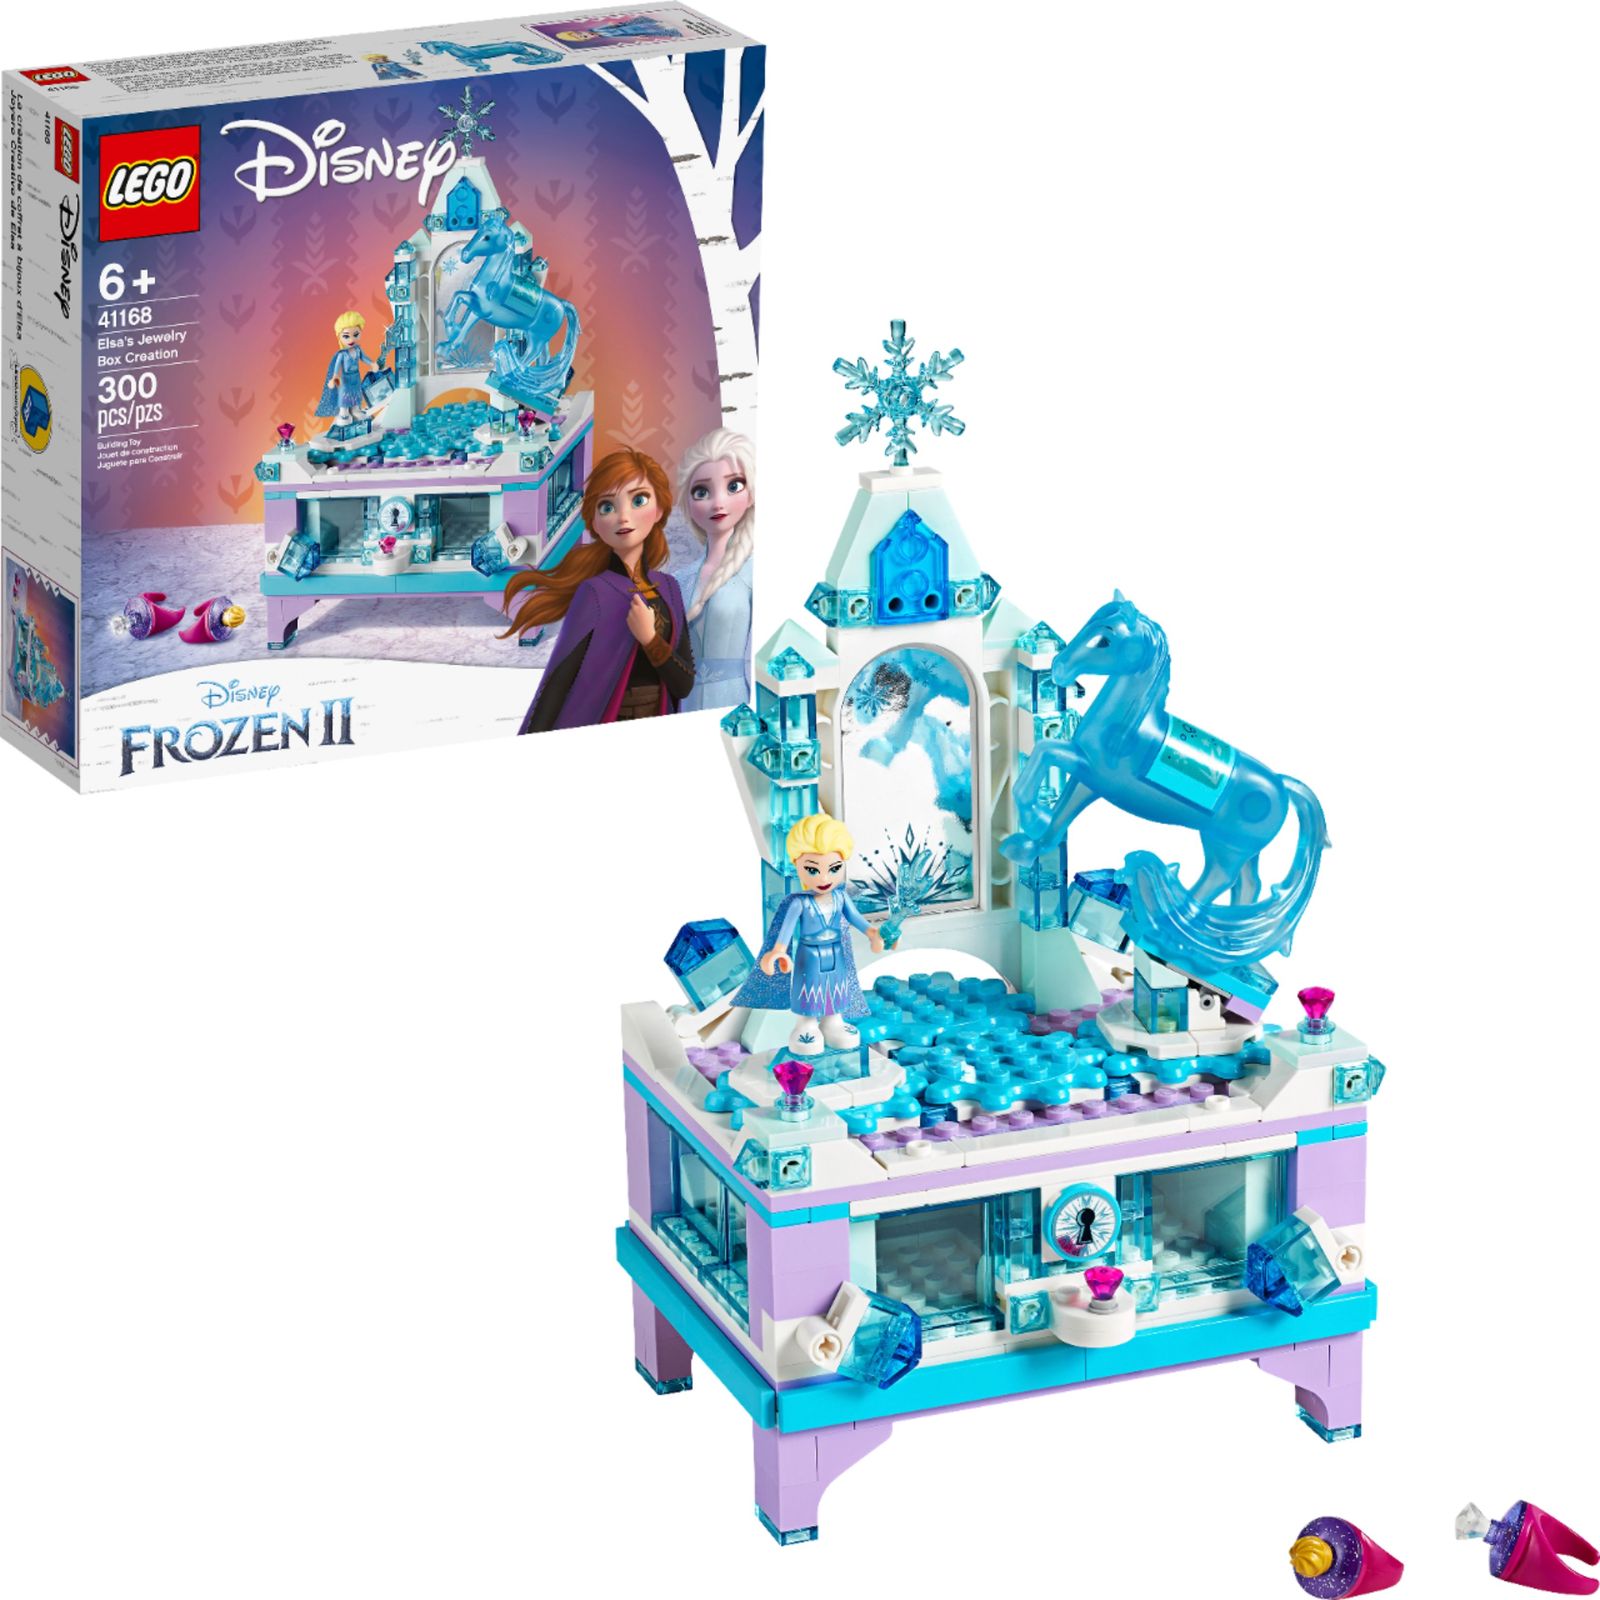 Disney Frozen Ii Elsa'S Jewelery Box 41168